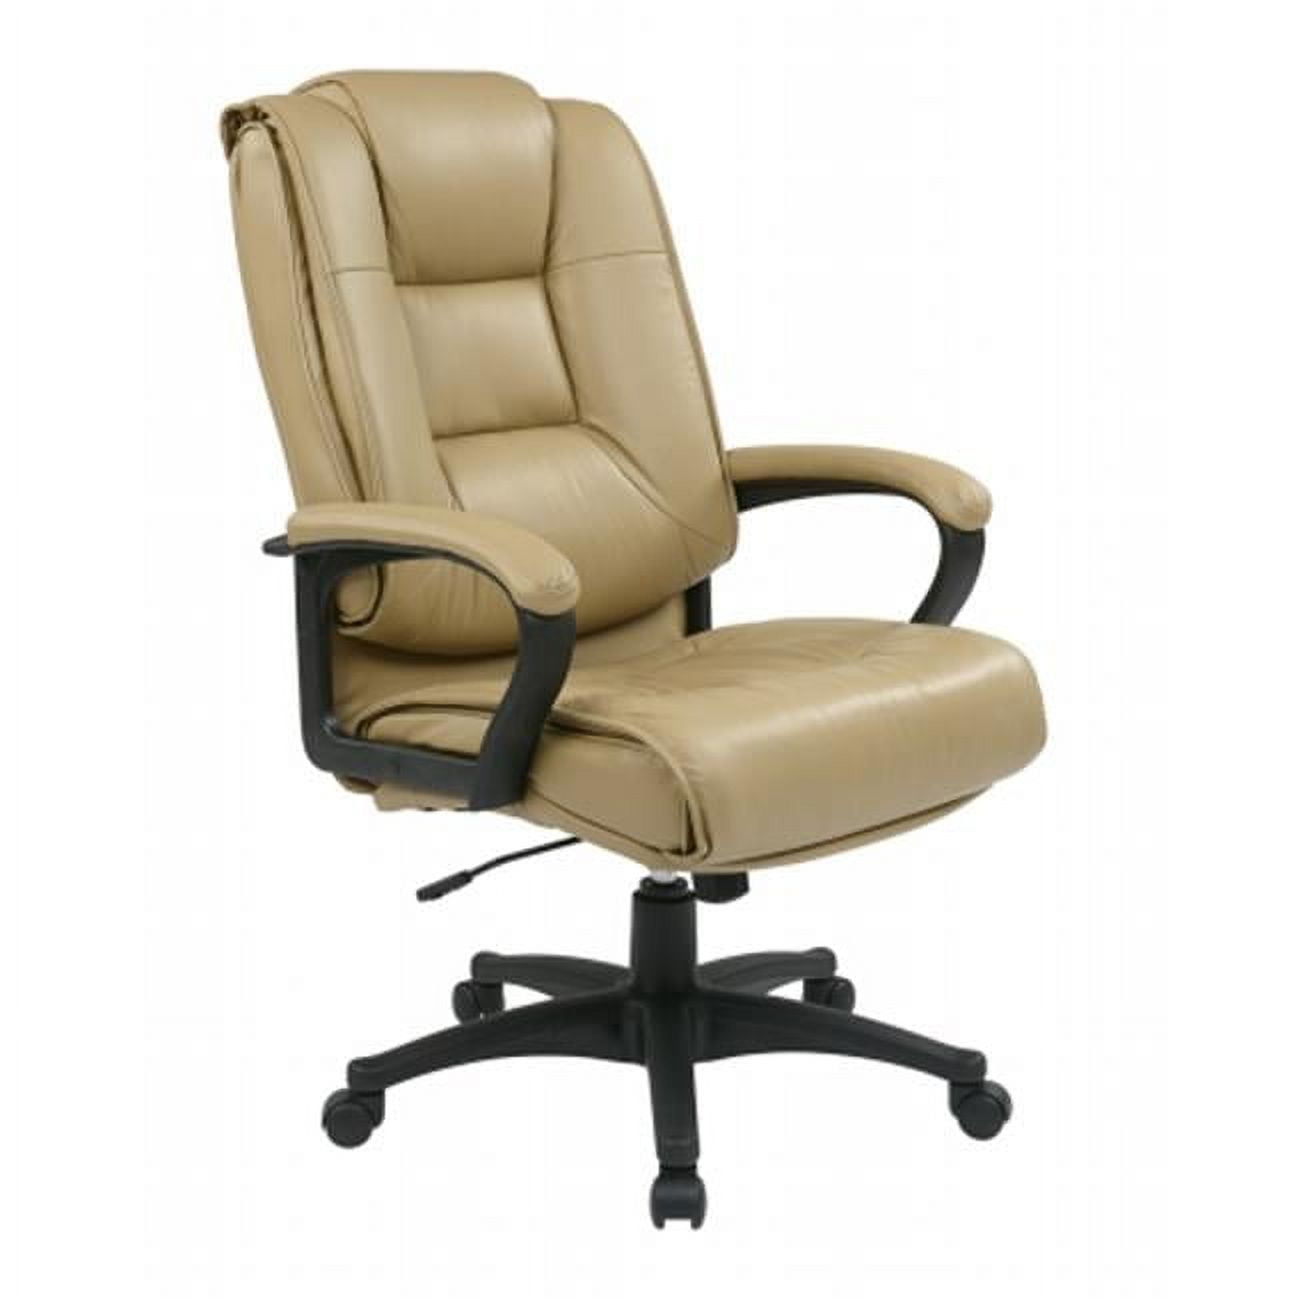 OFFICE STAR, Adj Arm, Burgundy, Desk Chair - 15Z324